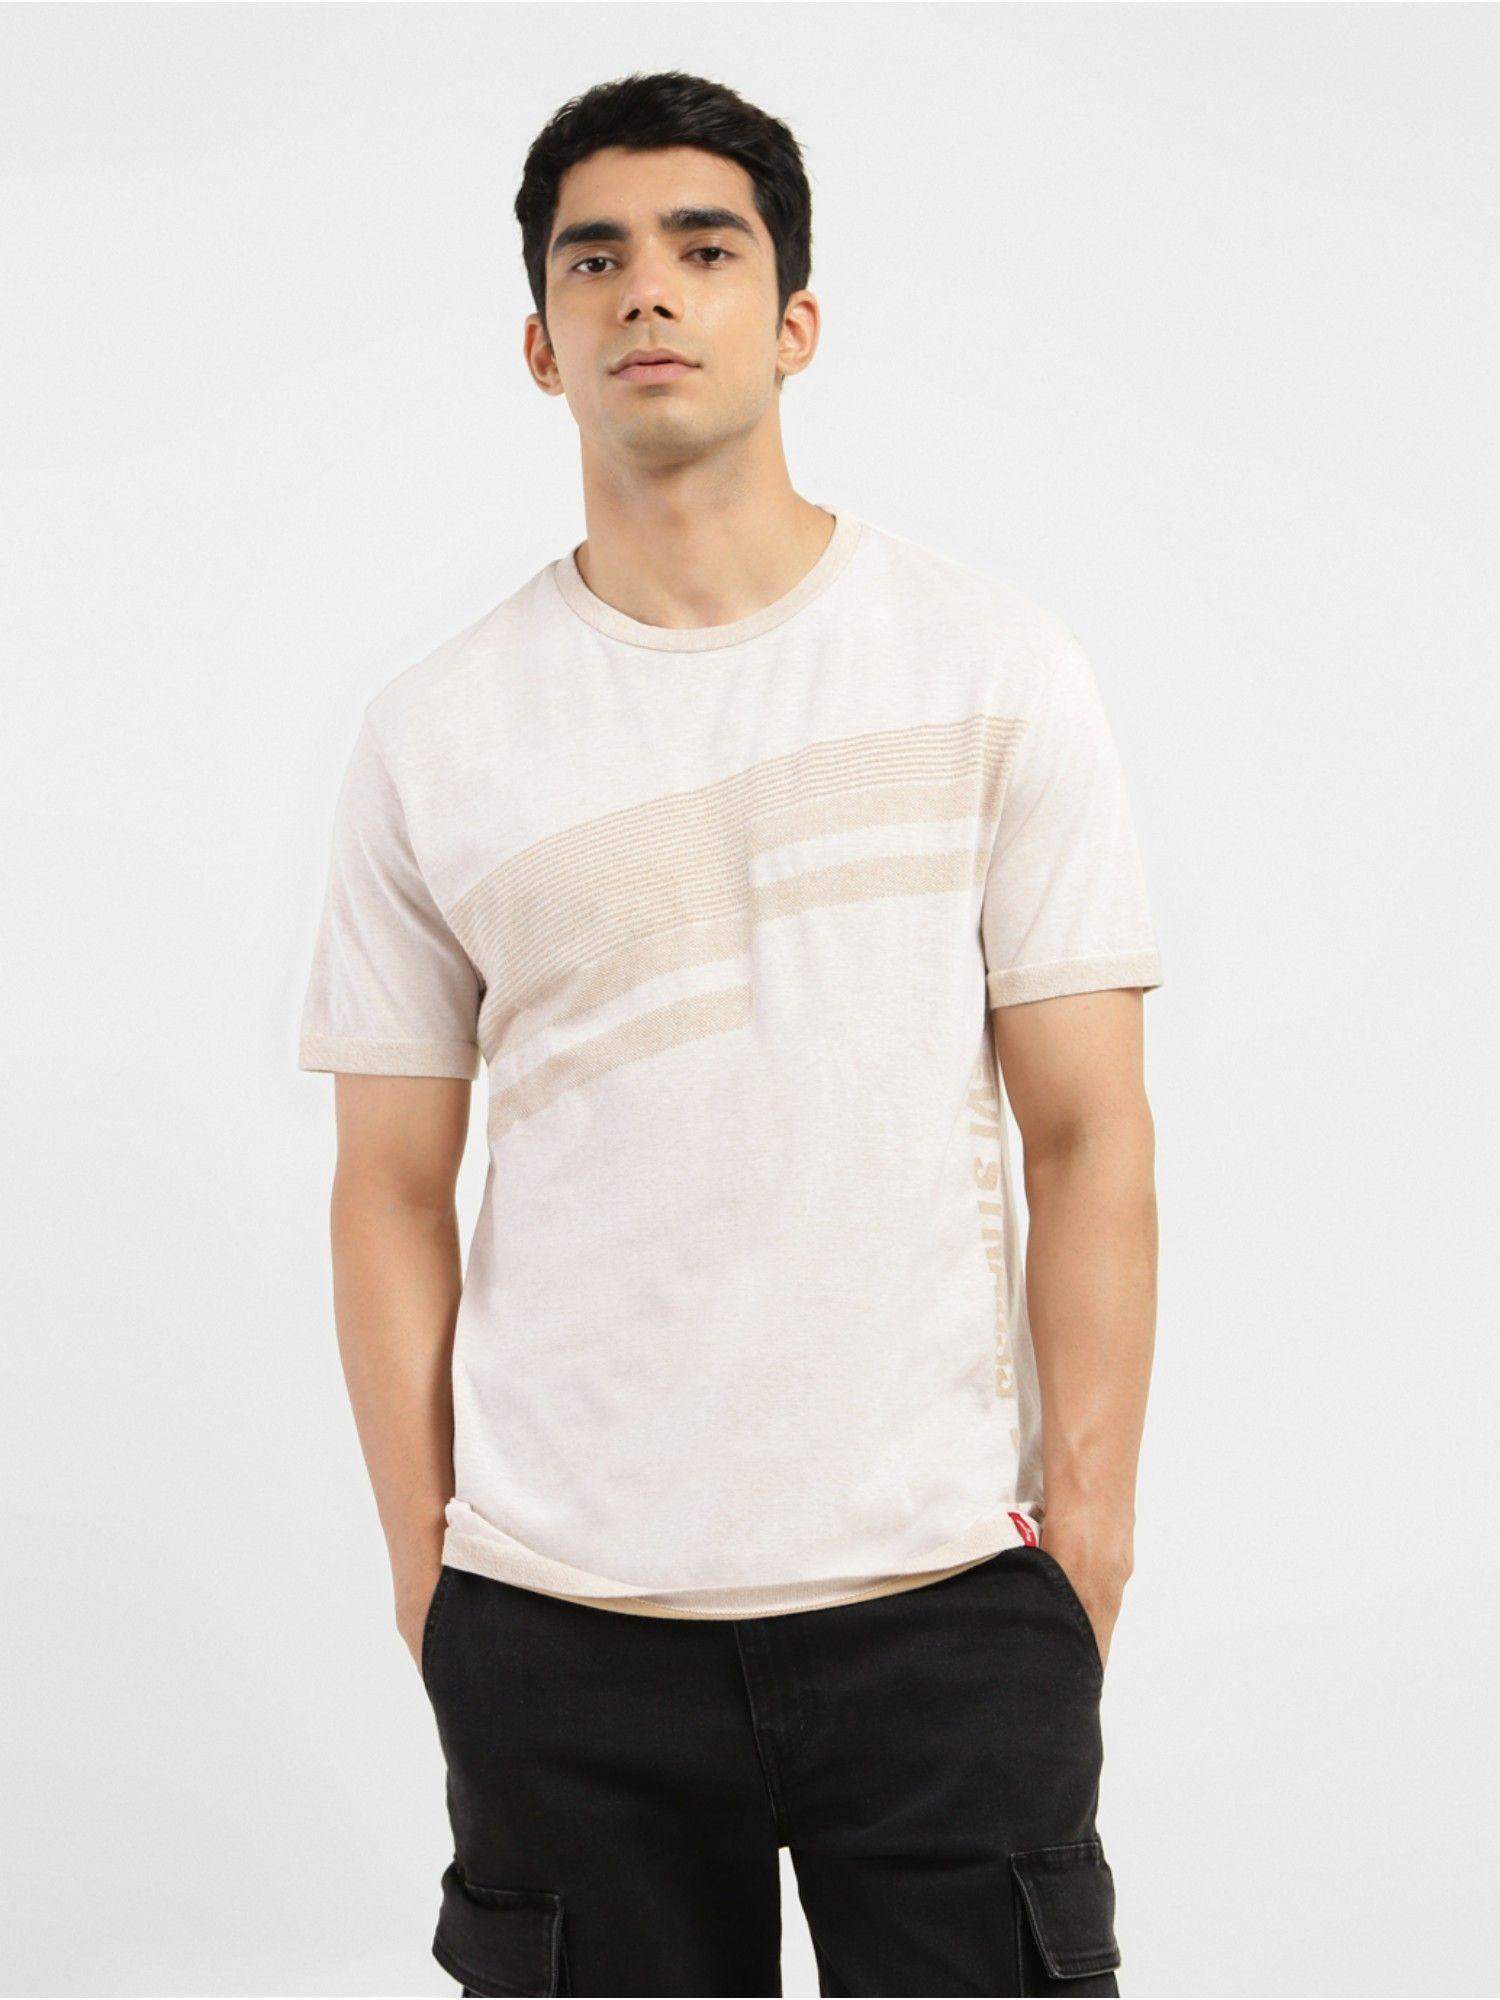 mens-striped-round-neck-t-shirt